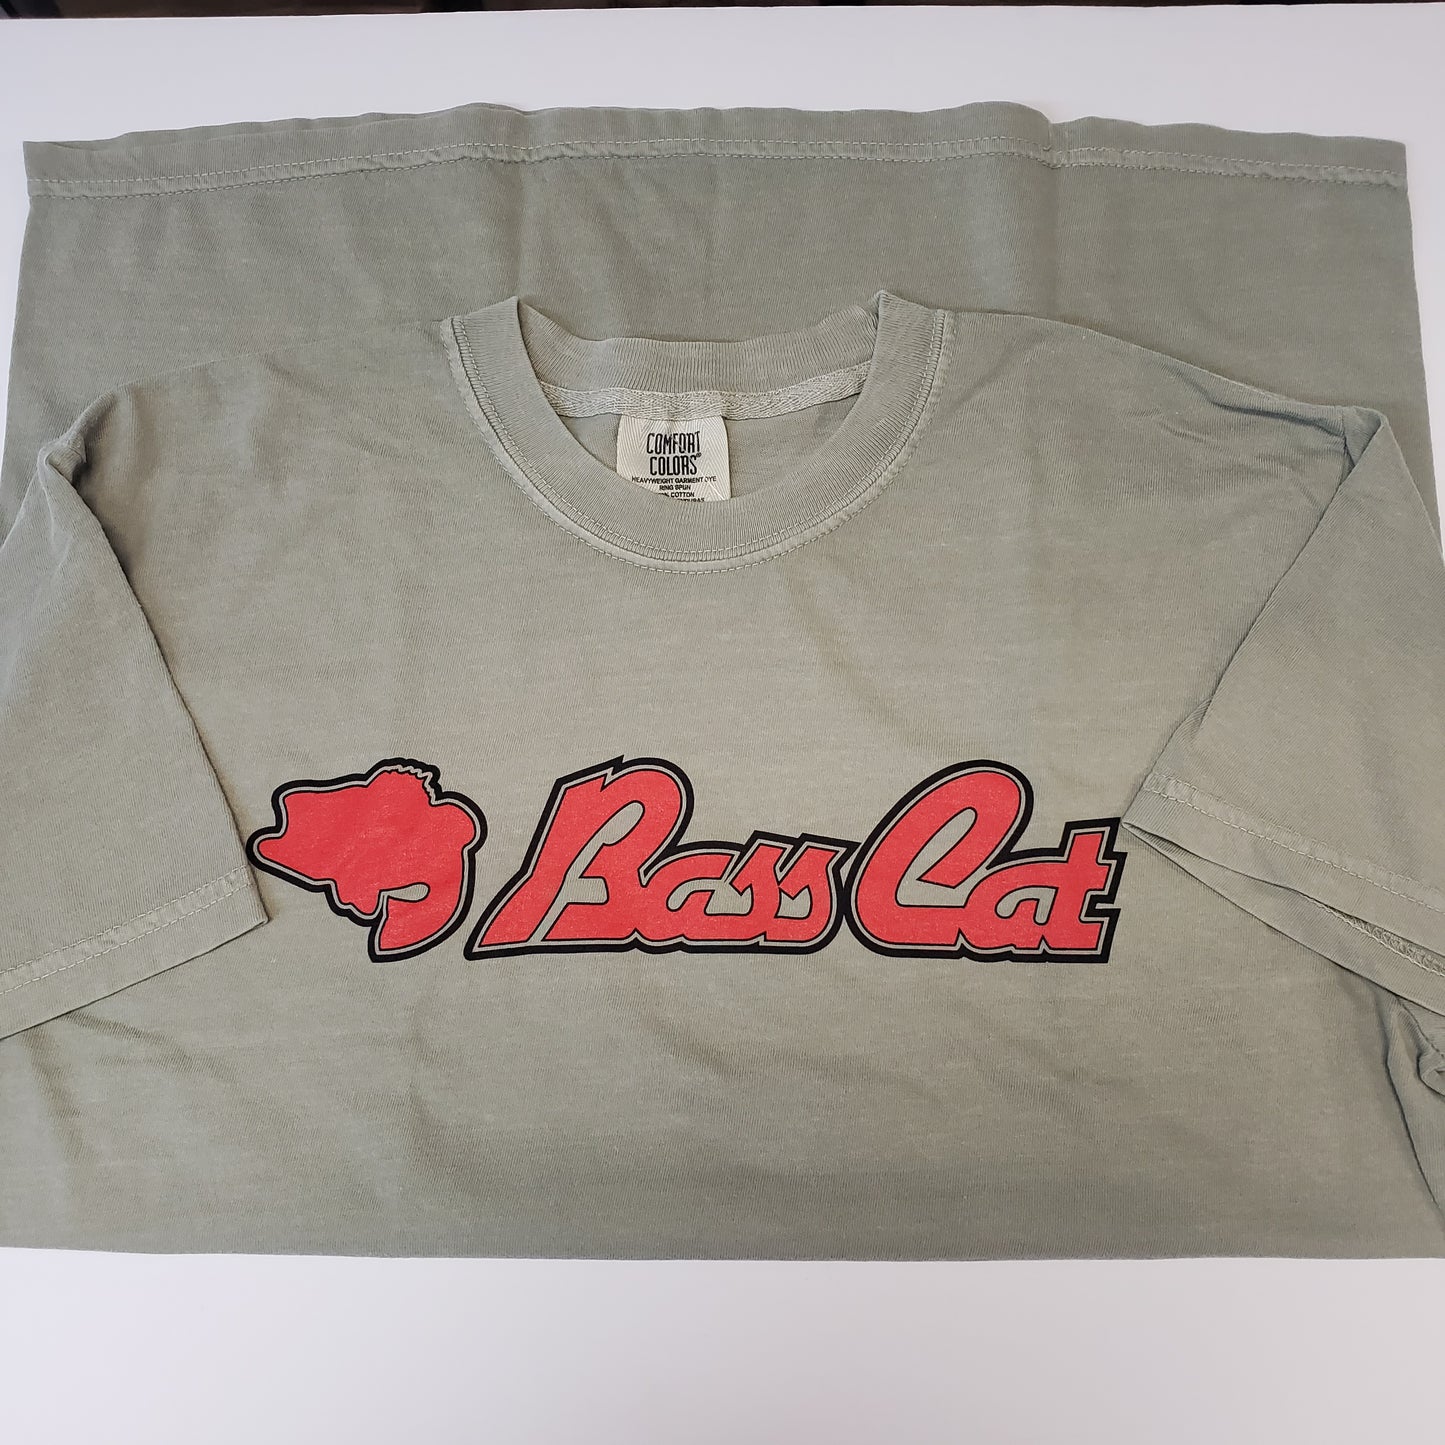 Bass Cat Comfort Color T-Shirt-Khaki 3XLarge